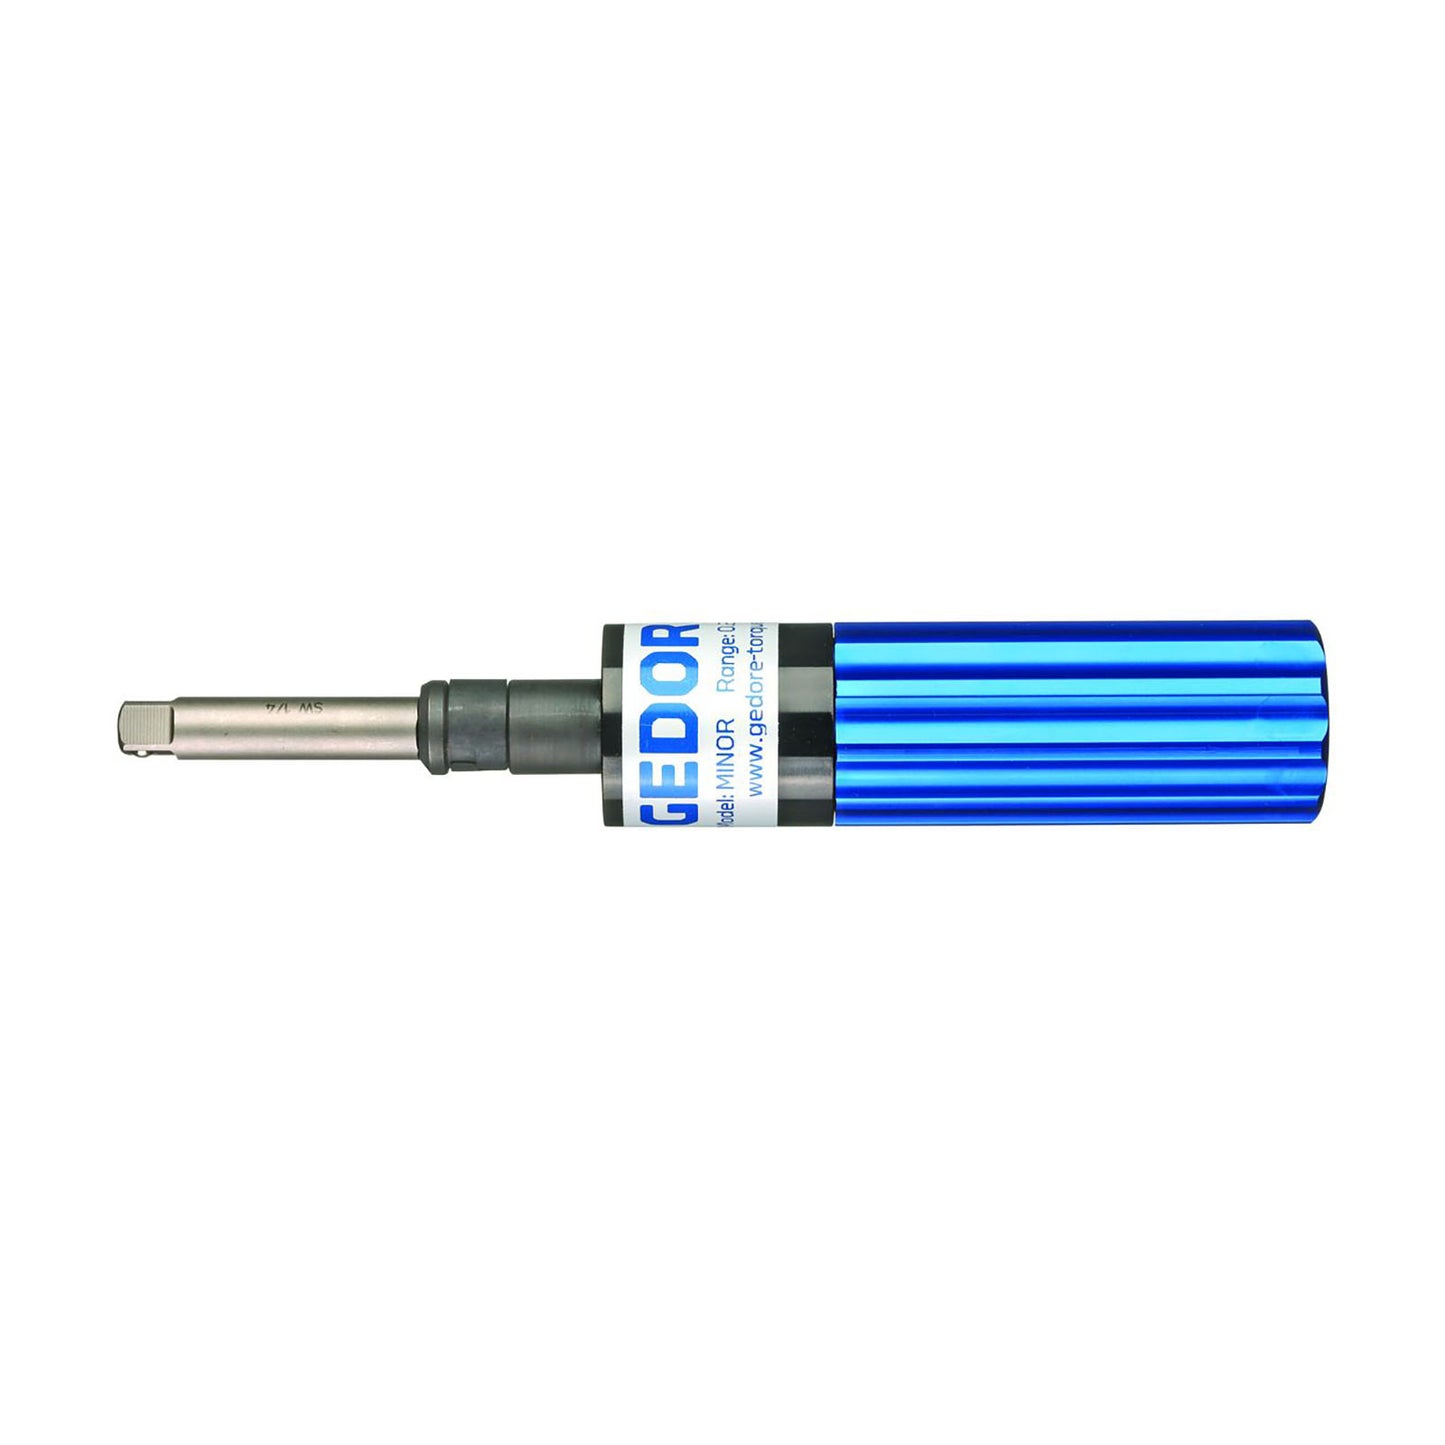 GEDORE MINOR FH G - Torque screwdriver 1/4" 14-135 cNm 015220 green (2306549)